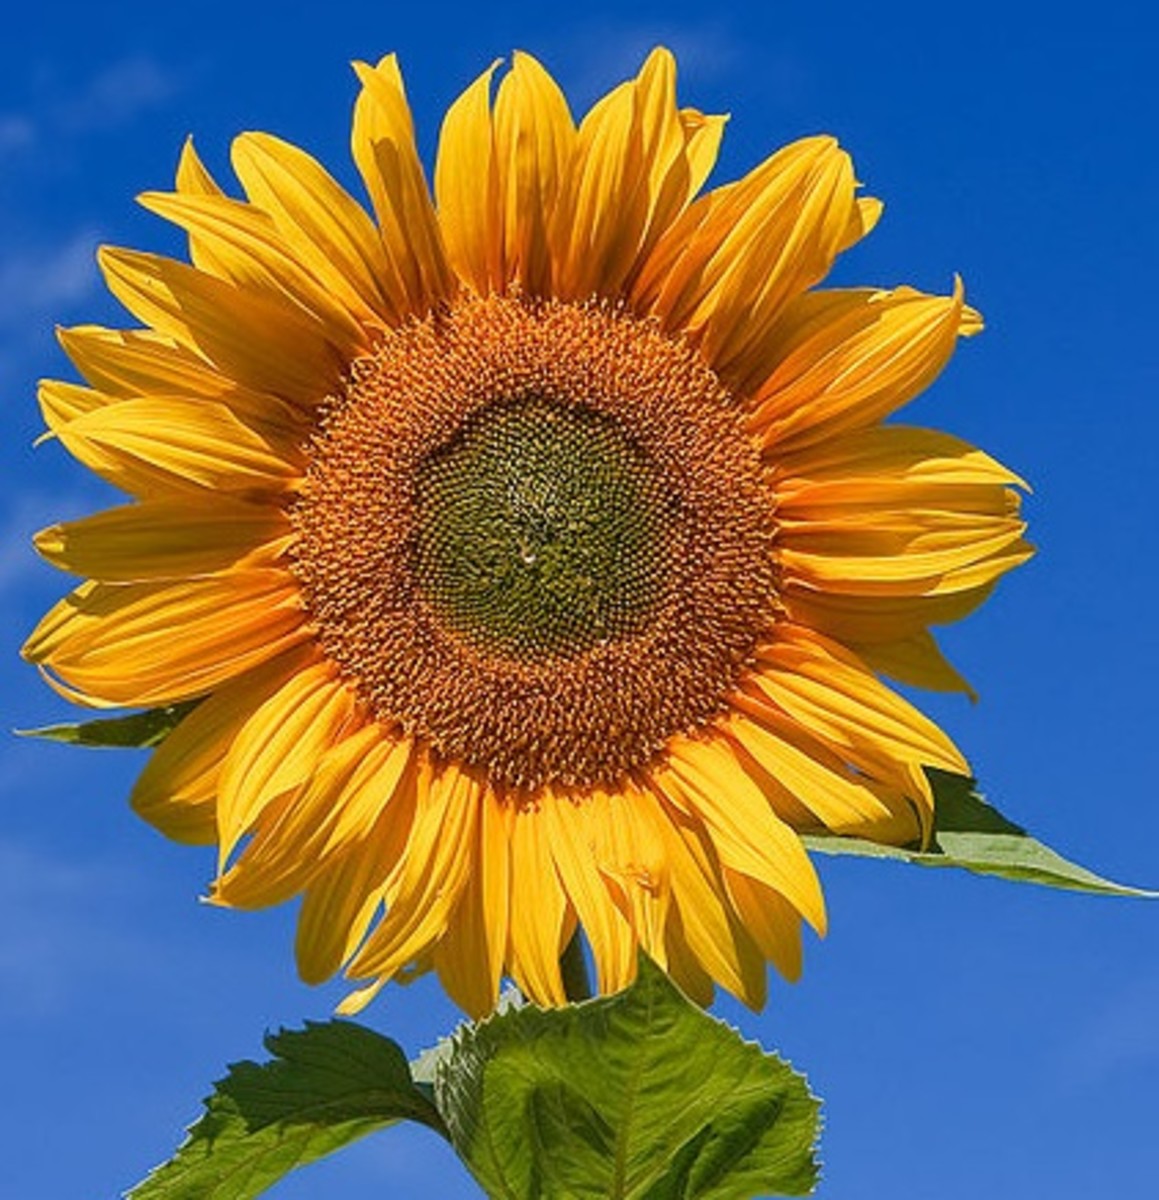 24. Sunflower